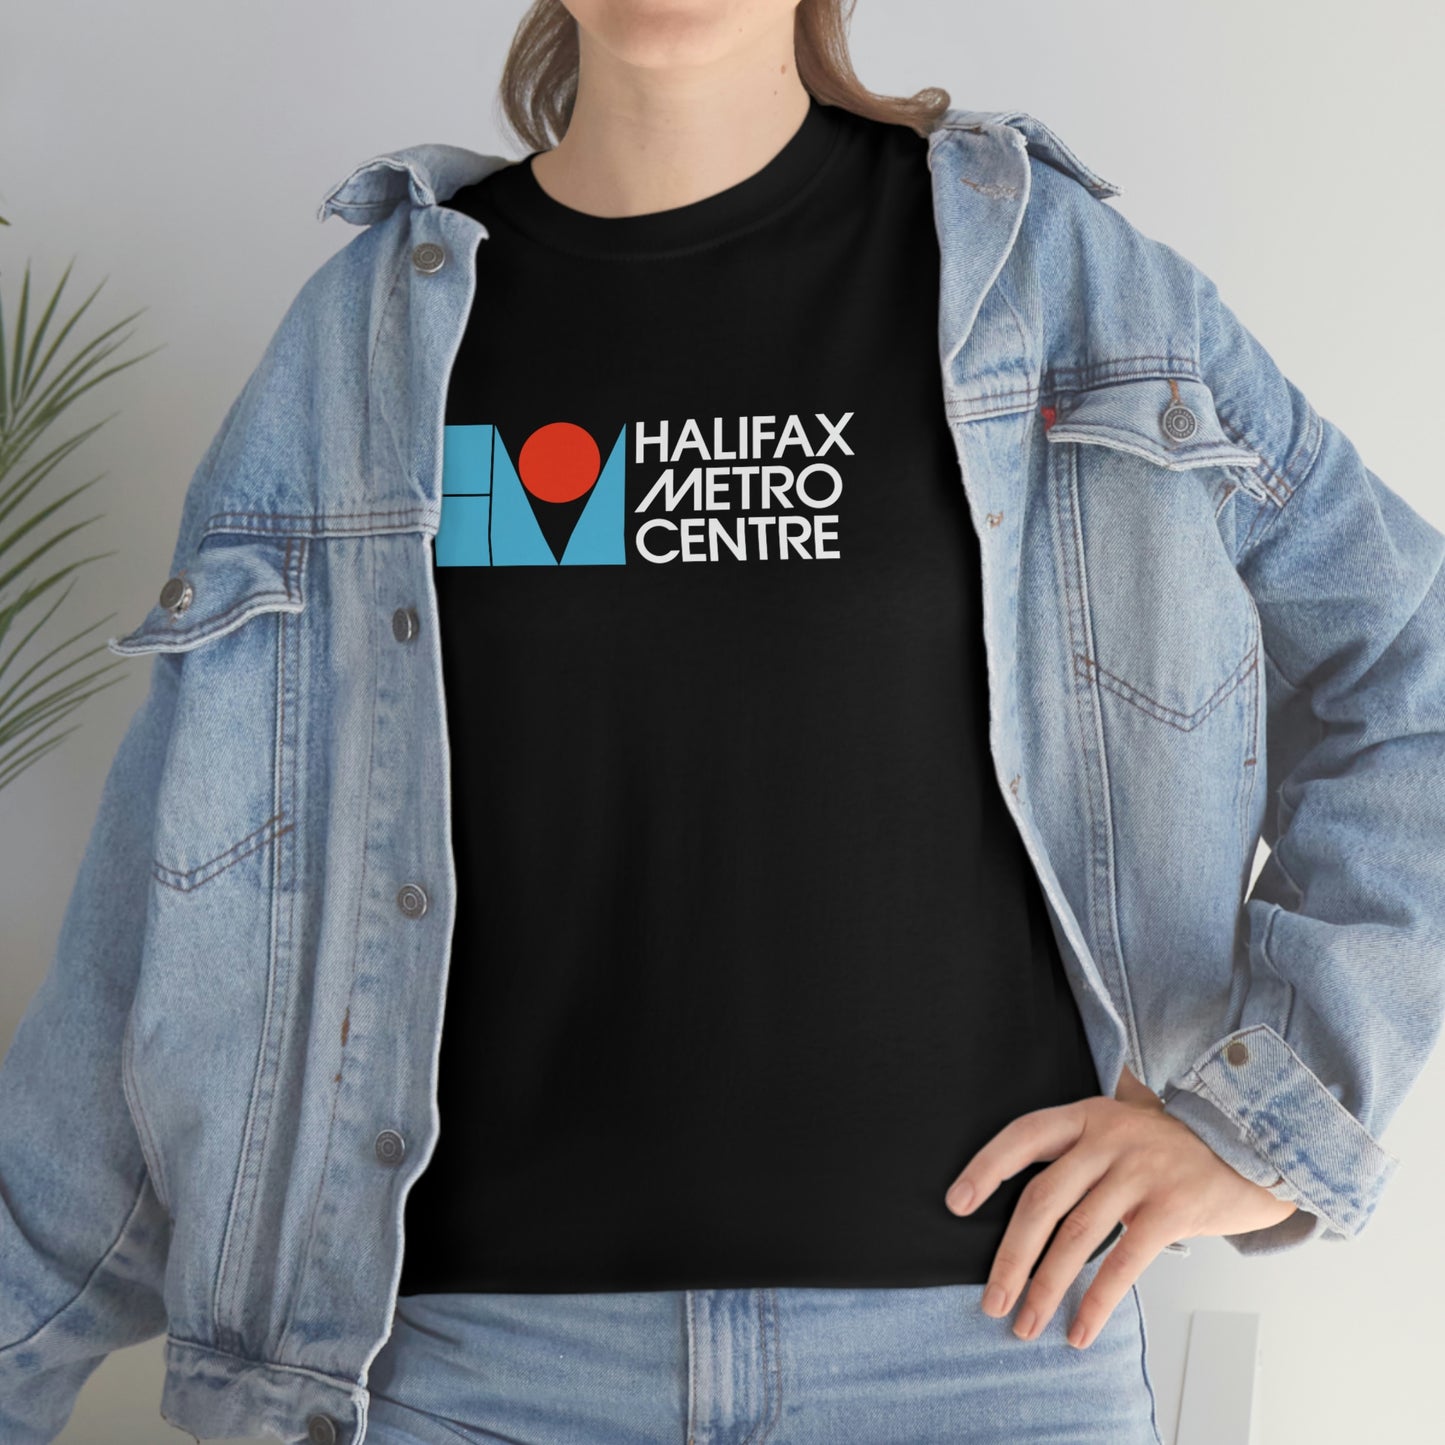 Halifax Metro Centre T-Shirt